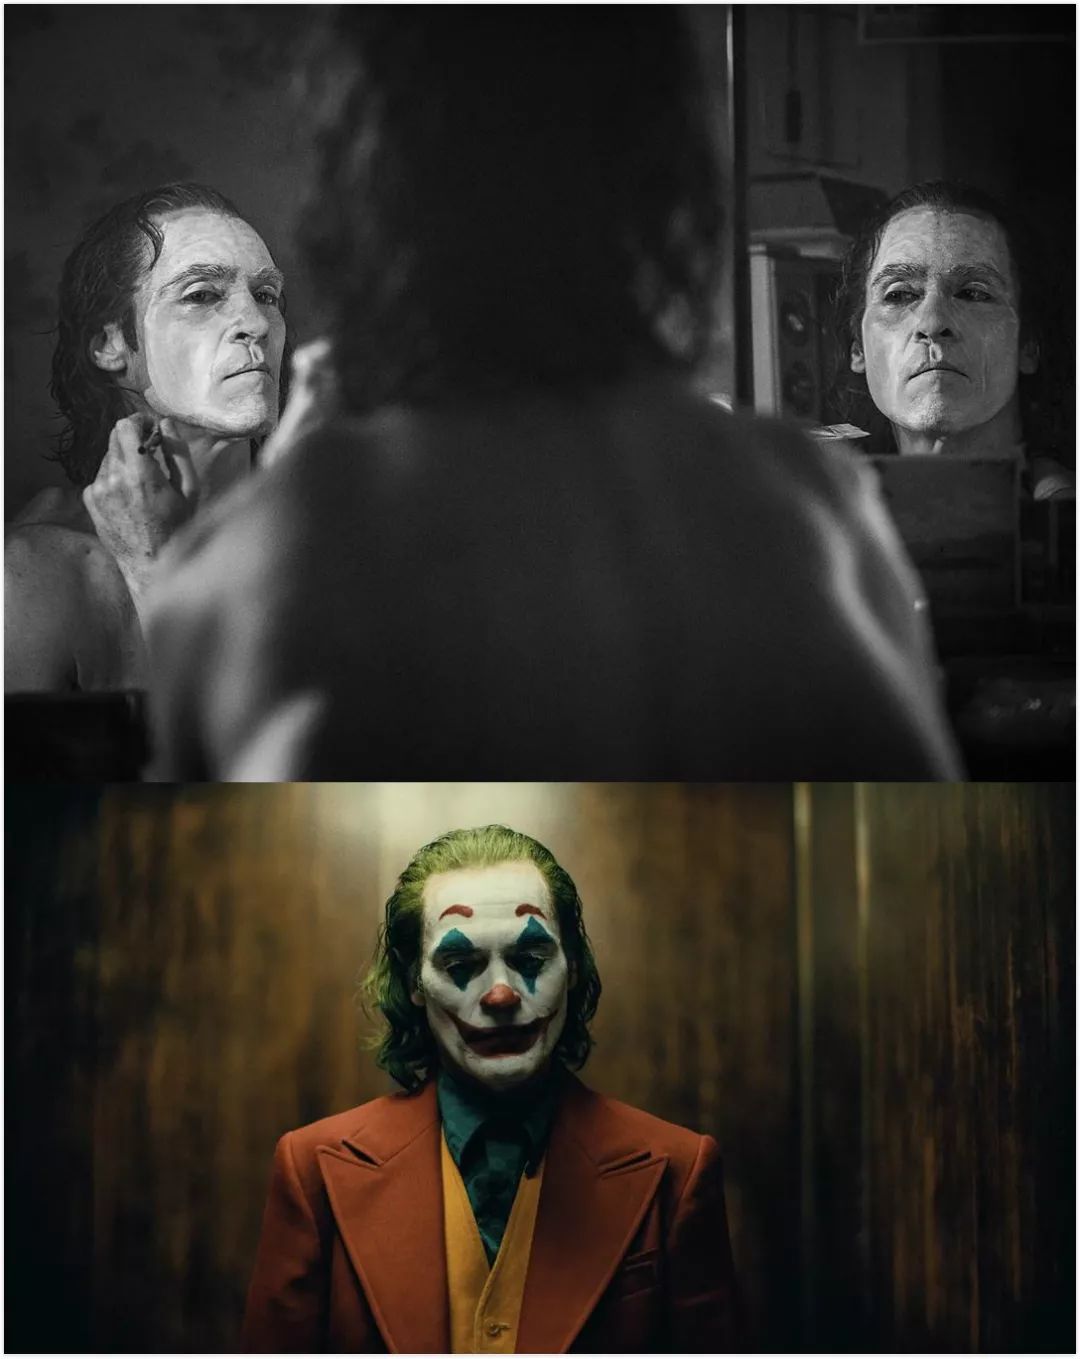 The Joker - The Joker Photo (30677750) - Fanpop